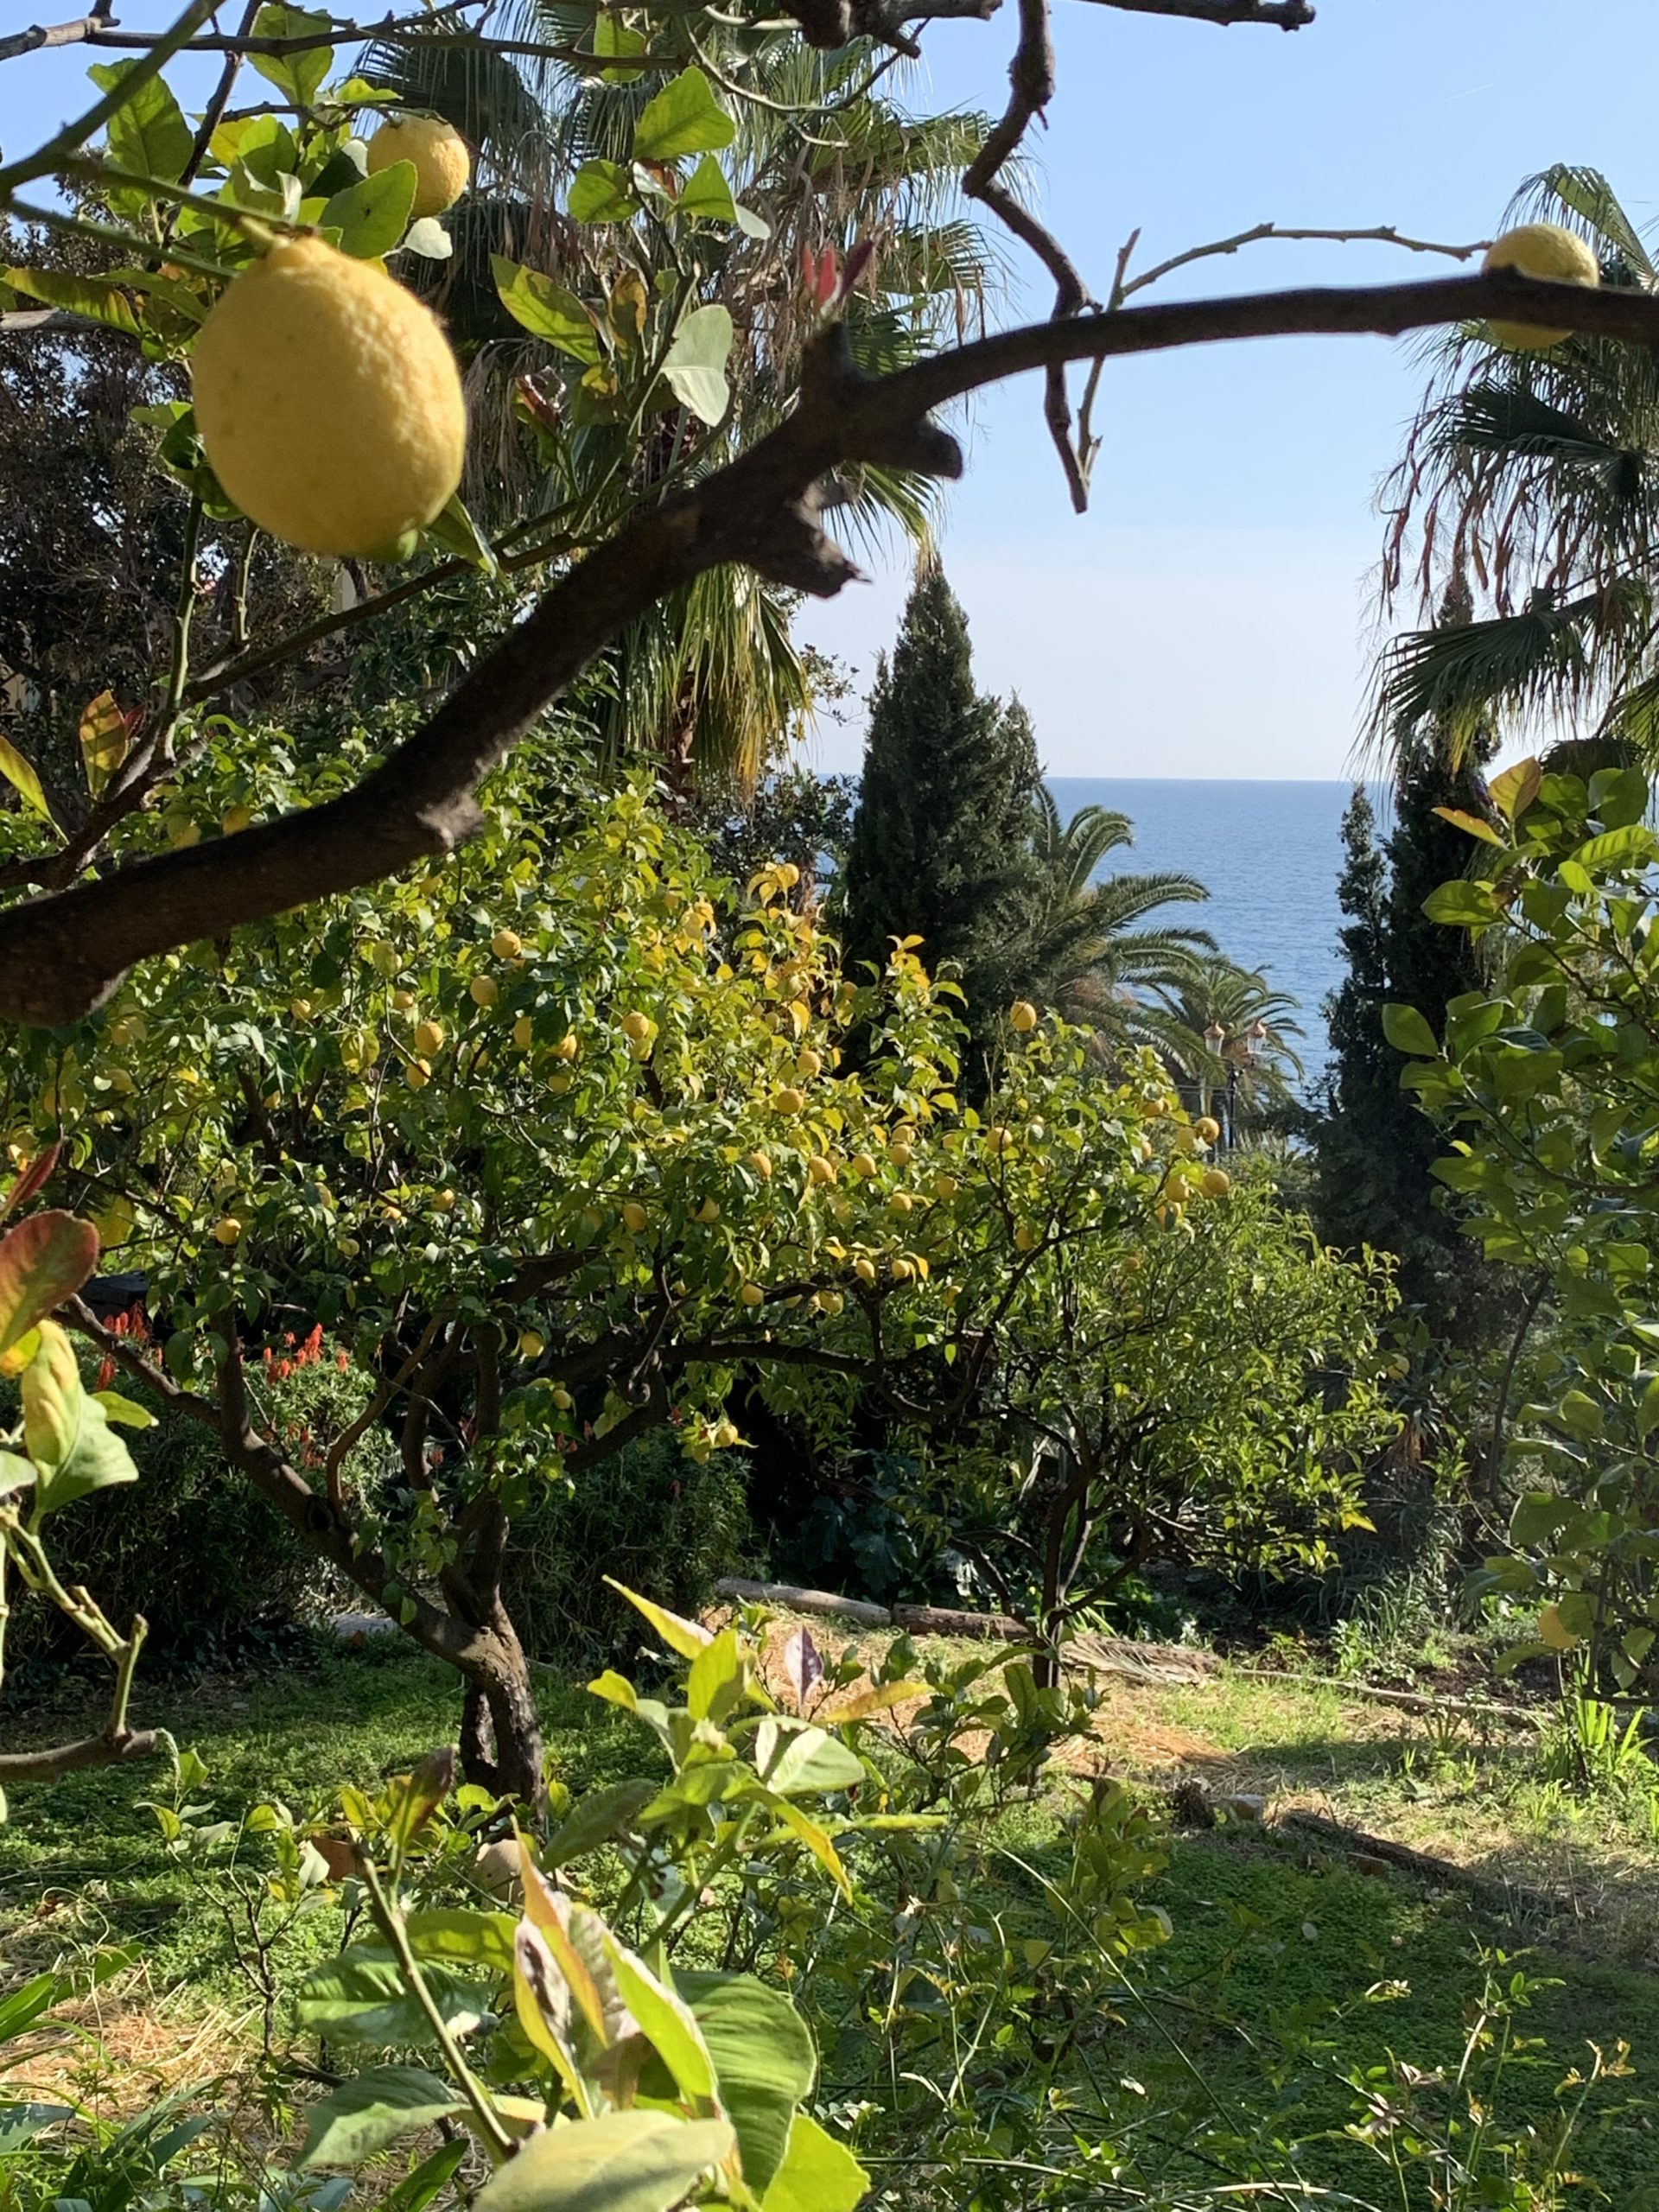 Le jardin de Mauro Colagreco face à la Méditerranée.